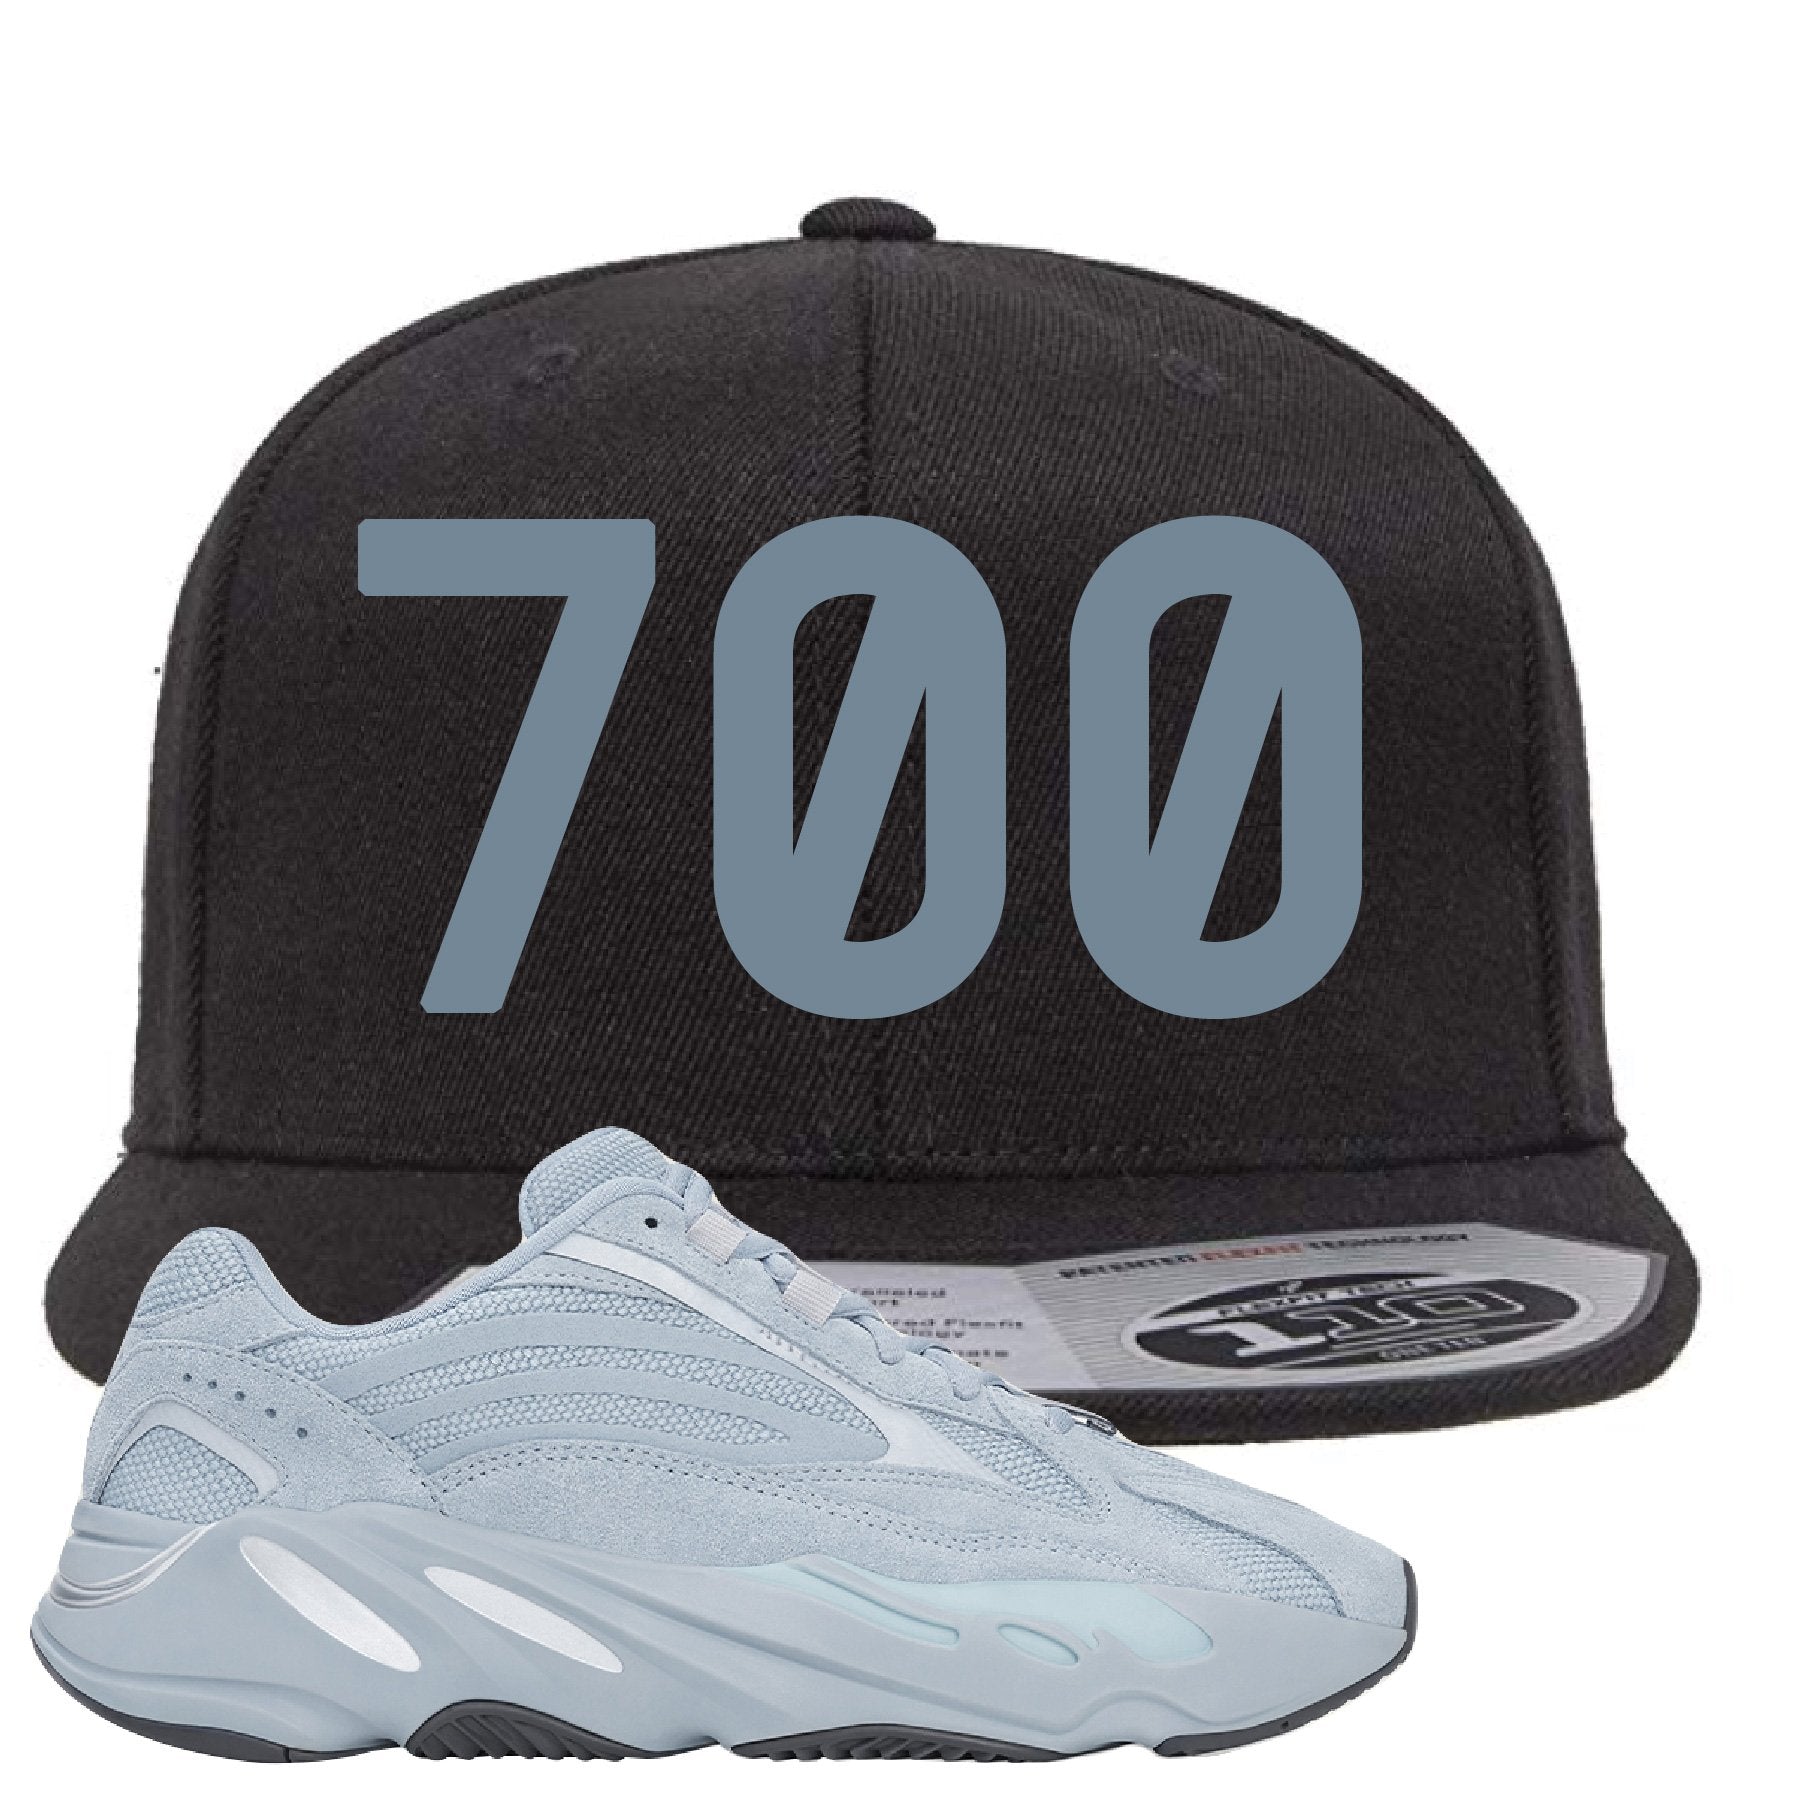 Yeezy Boost 700 V2 Hospital Blue 700 Sneaker Matching Black Snapback Hat